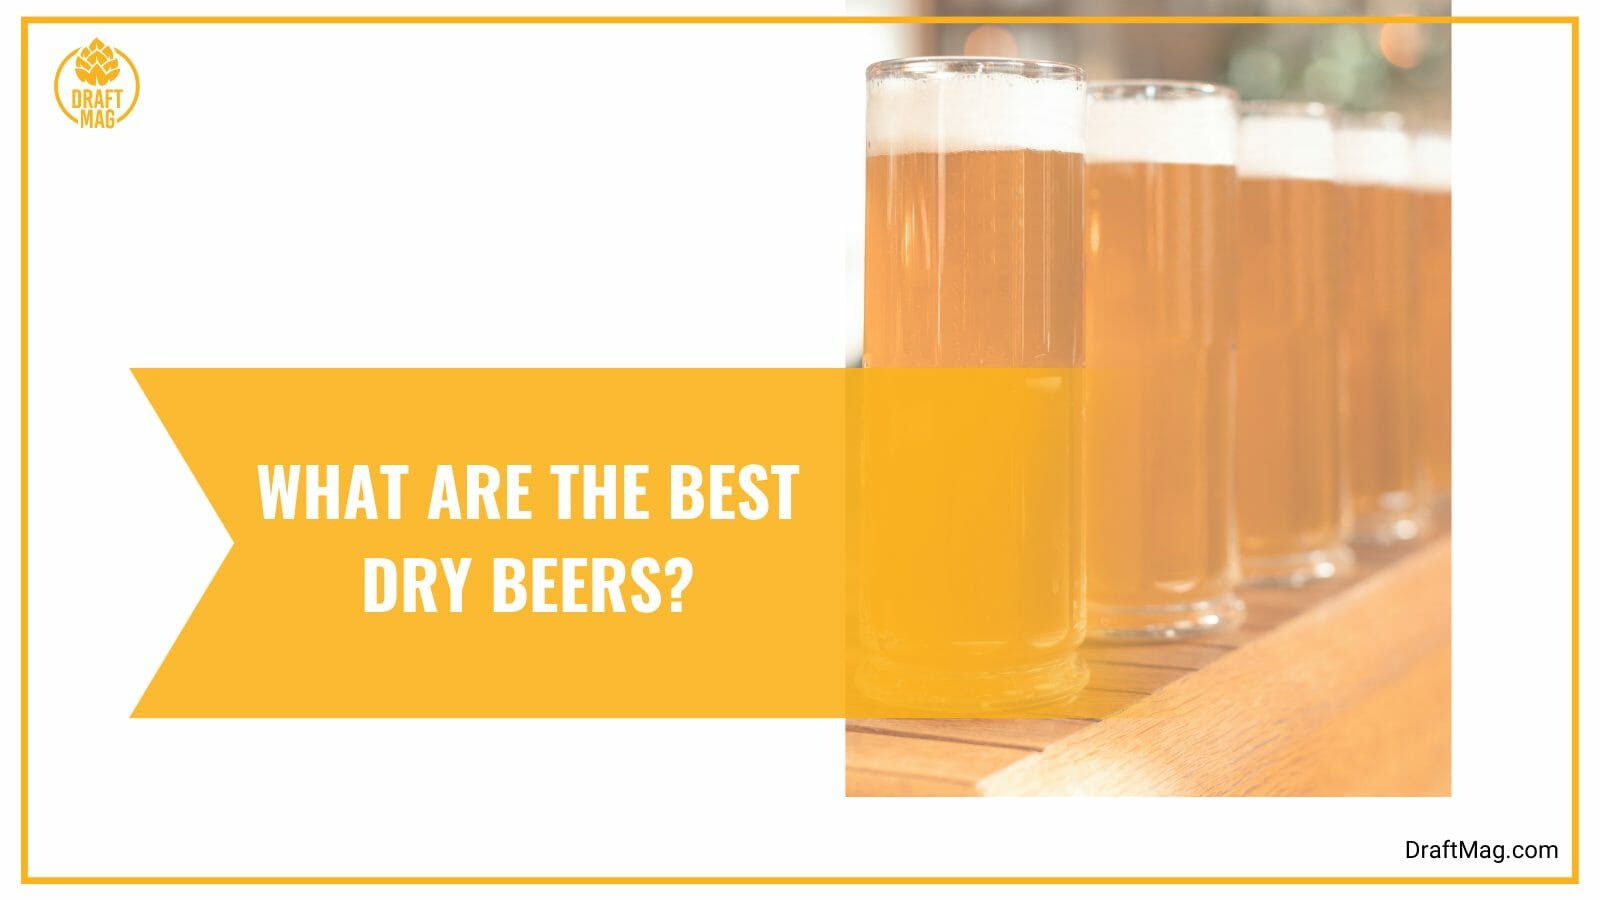 The best dry beers